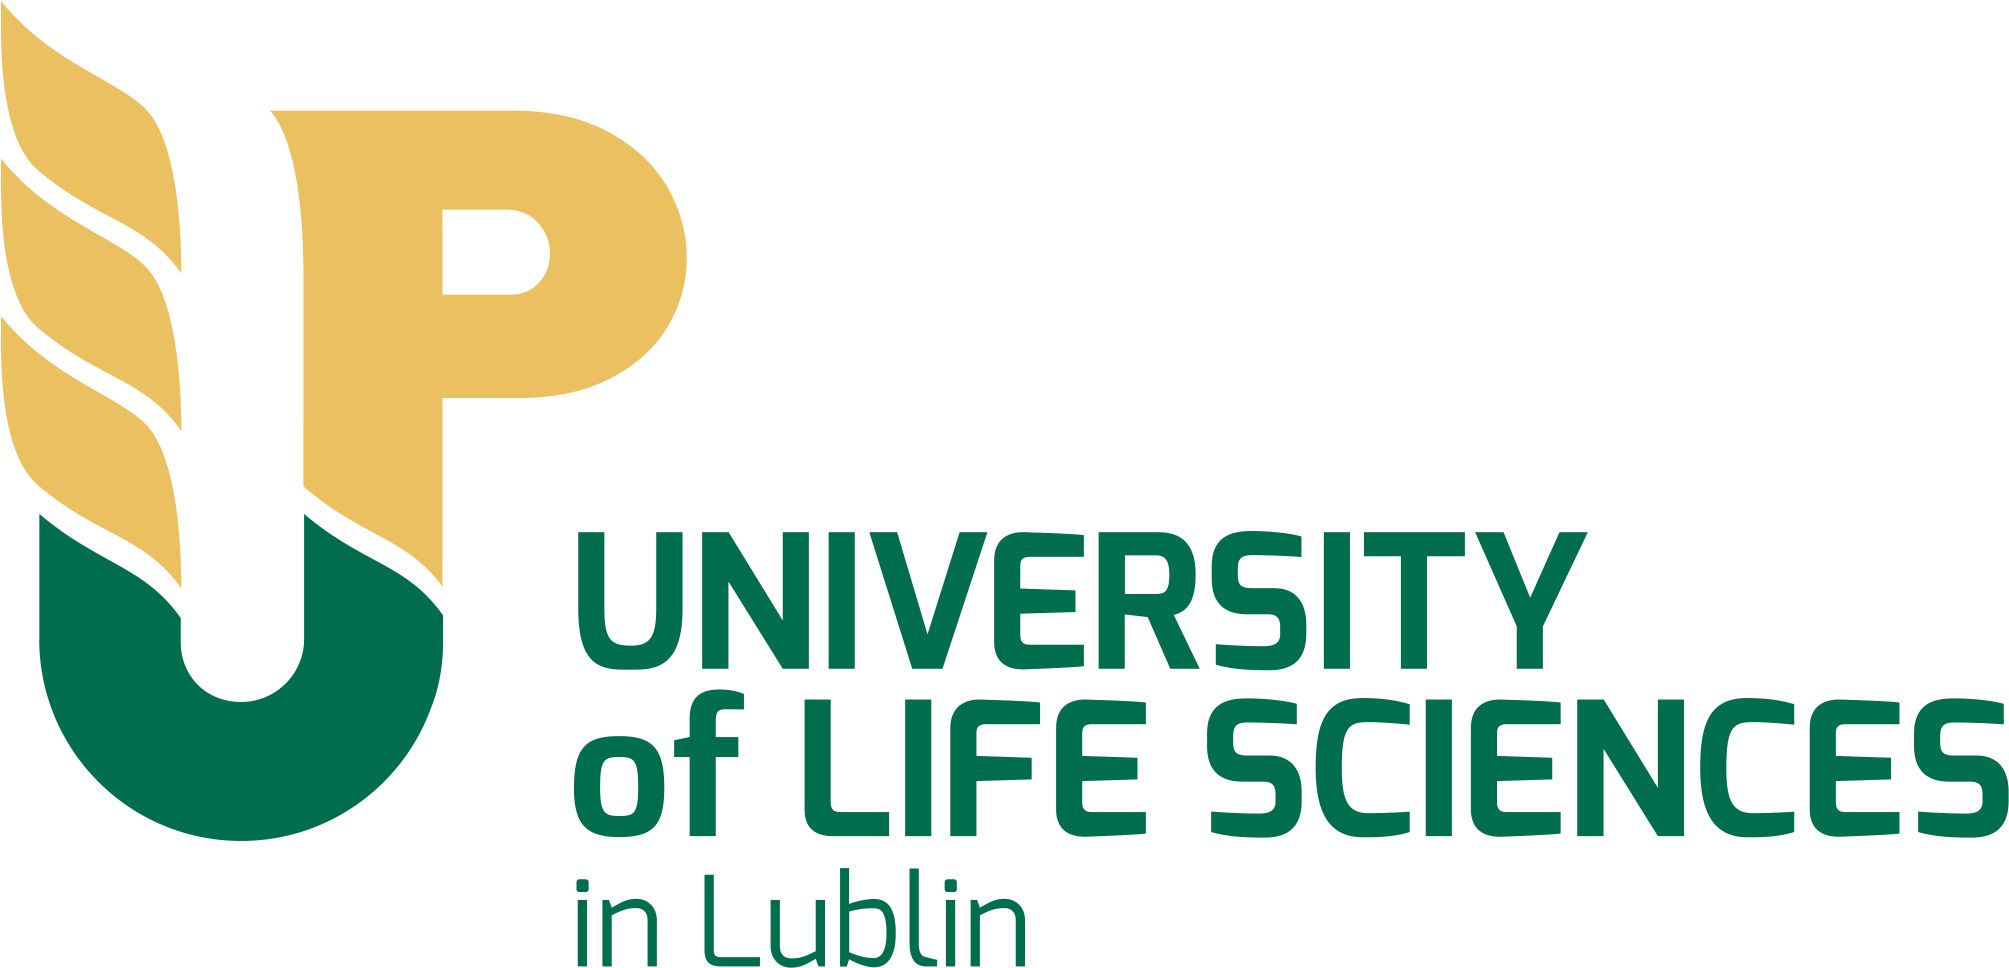 University of Life Sciences logo